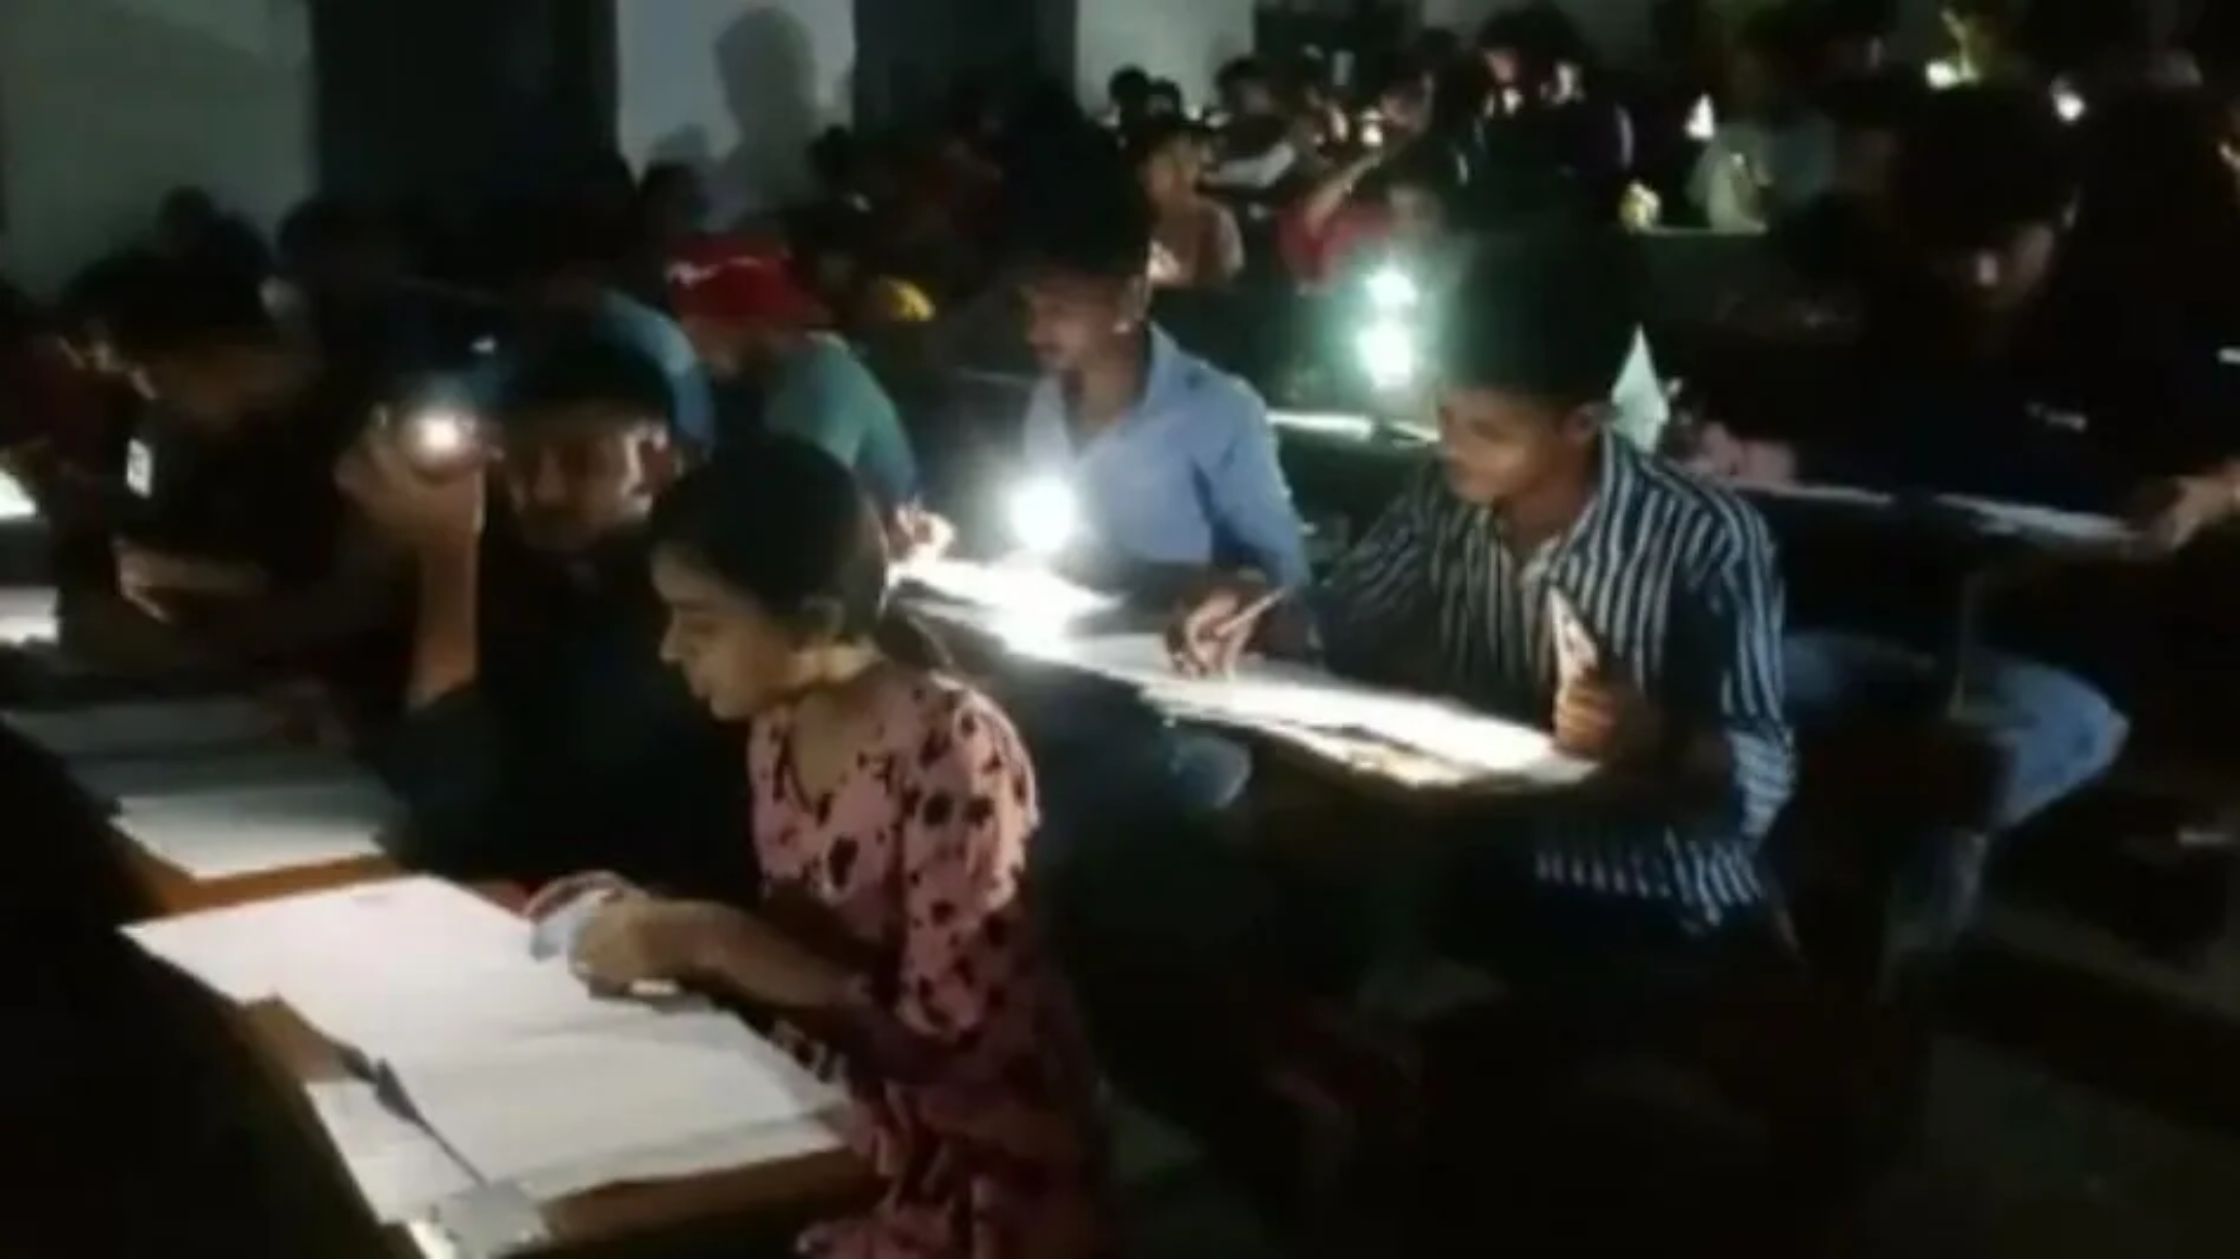 Power failure during BA exam in Bihar